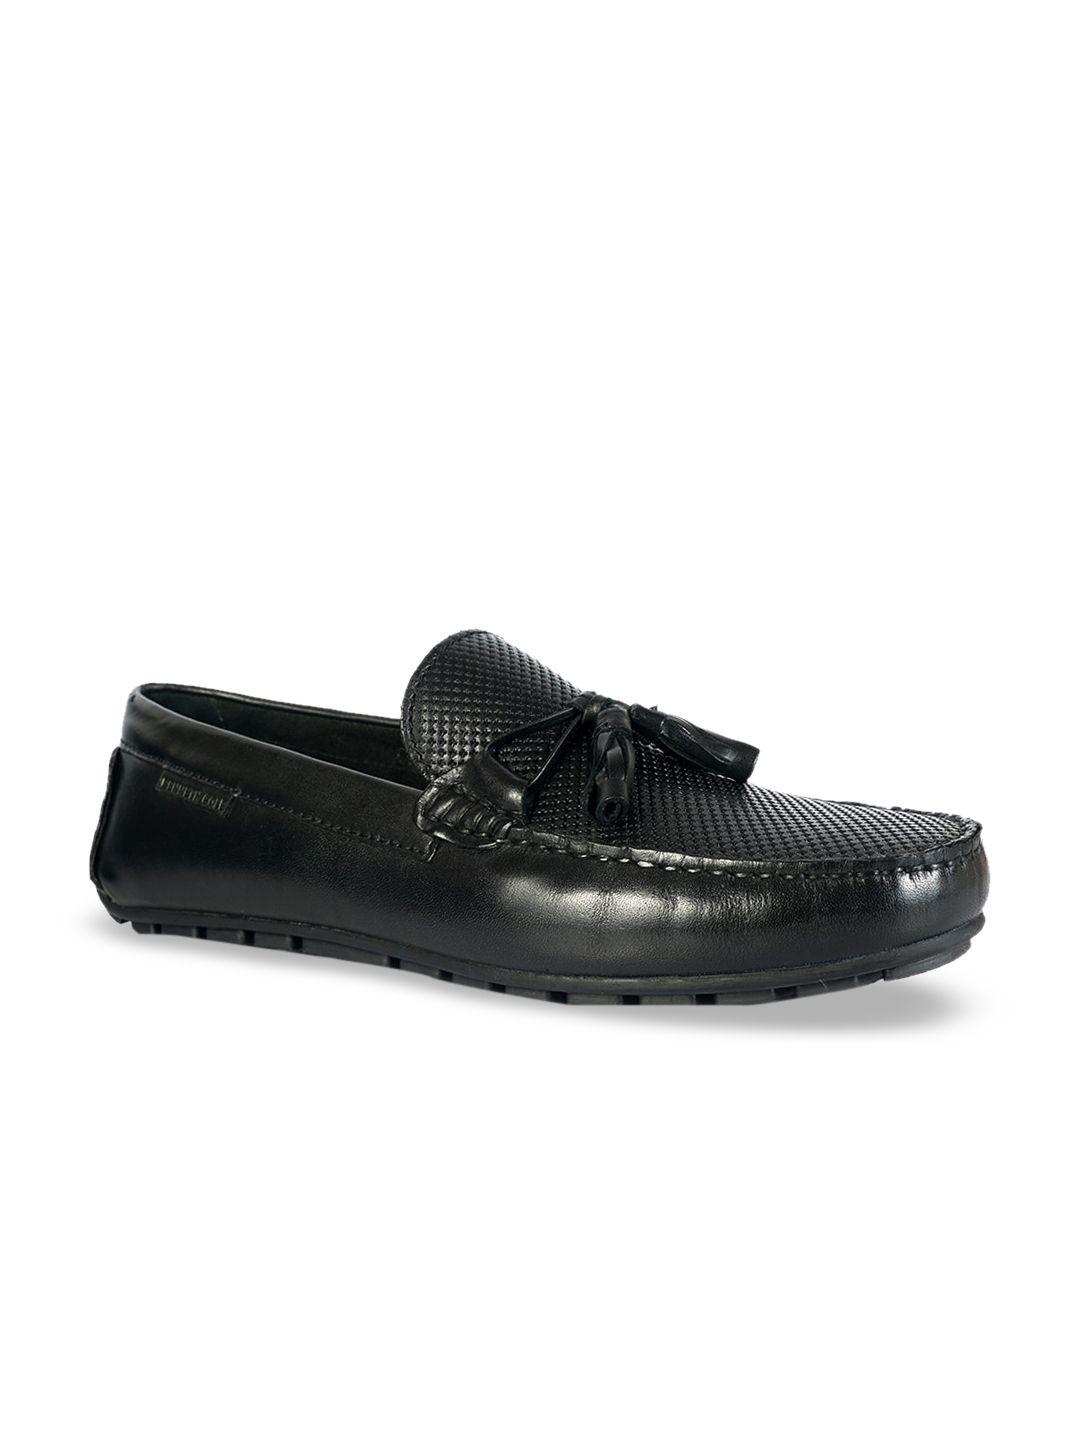 kenneth-cole-men-black-solid-leather-formal-loafers